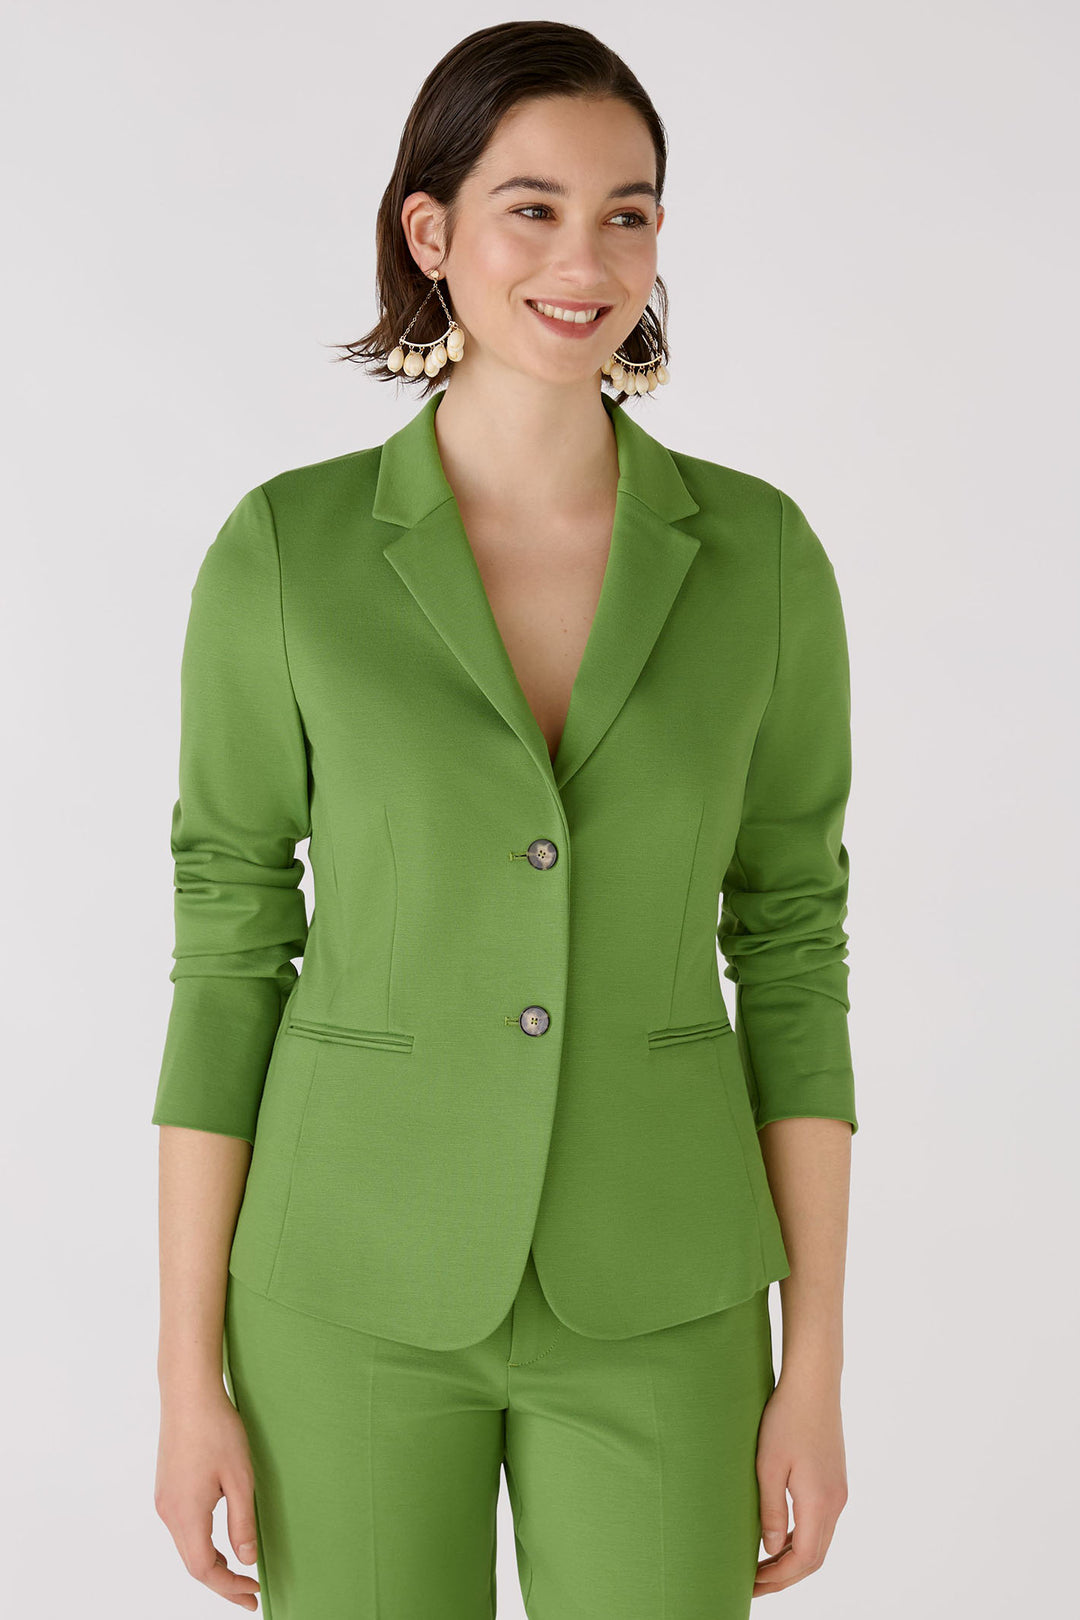 Oui 88450 Green Cloyee Two Button Blazer Jacket - Olivia Grace Fashion